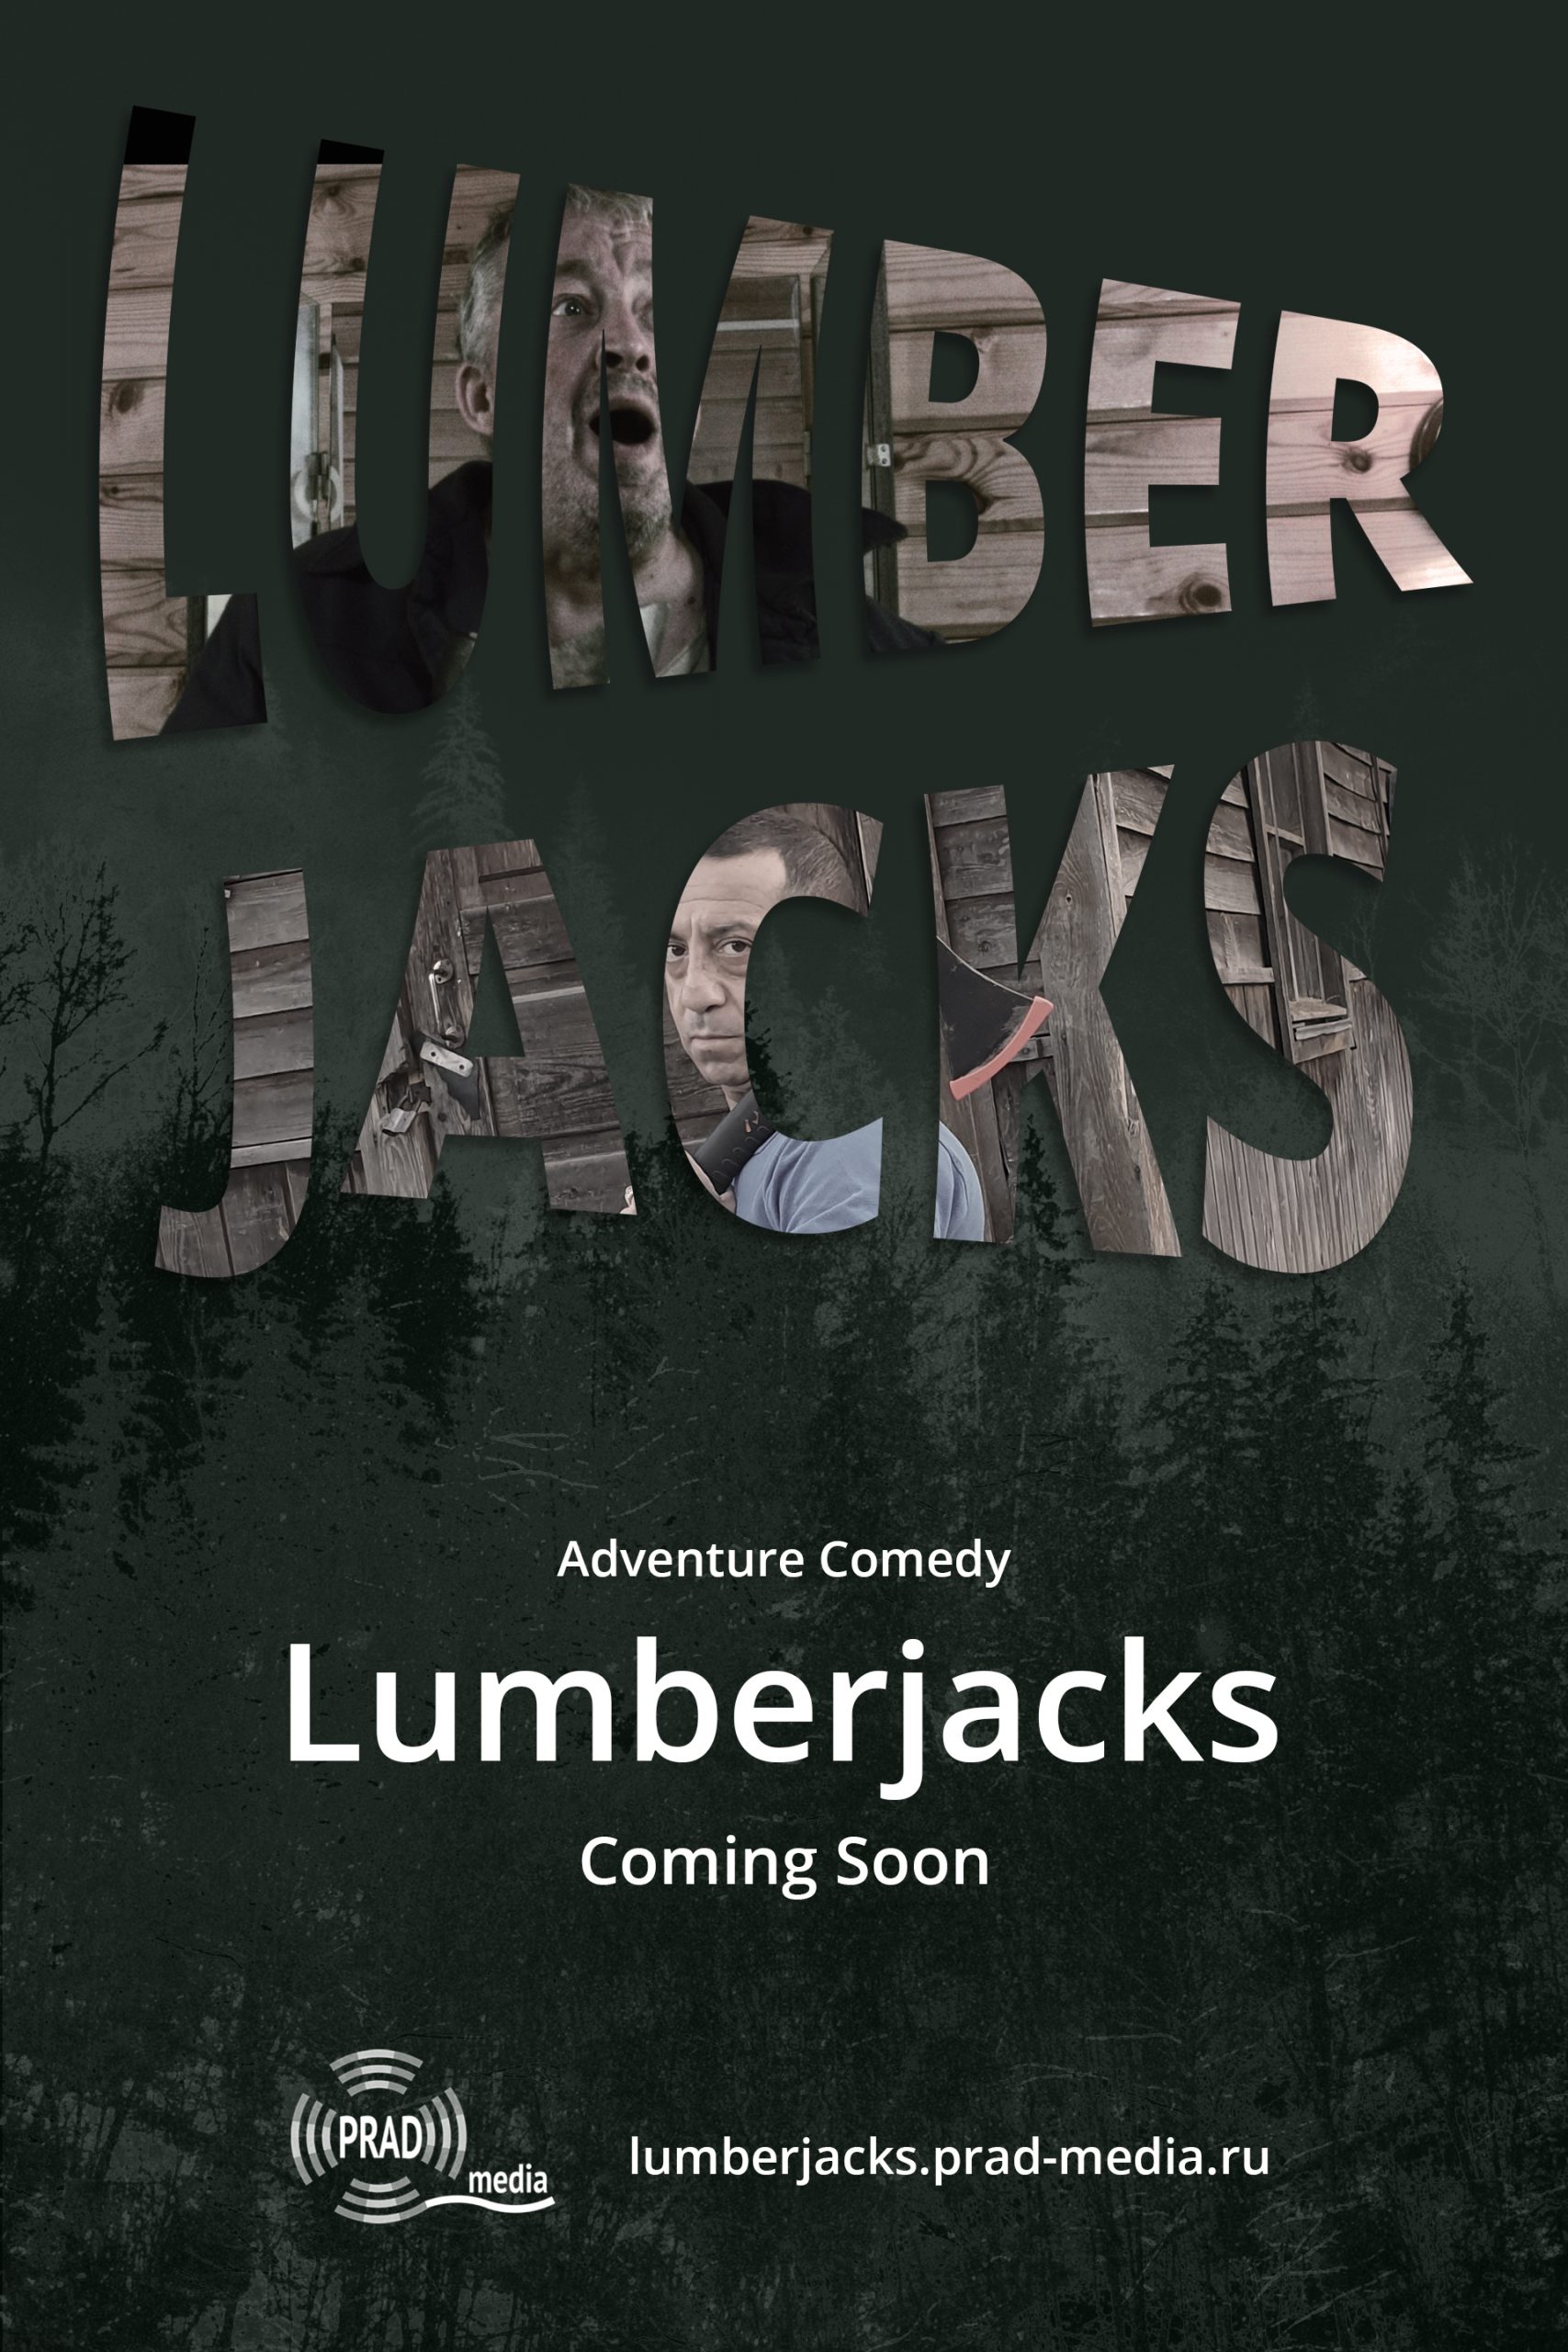 lumberjuck, comedy, adventure, adv, offer